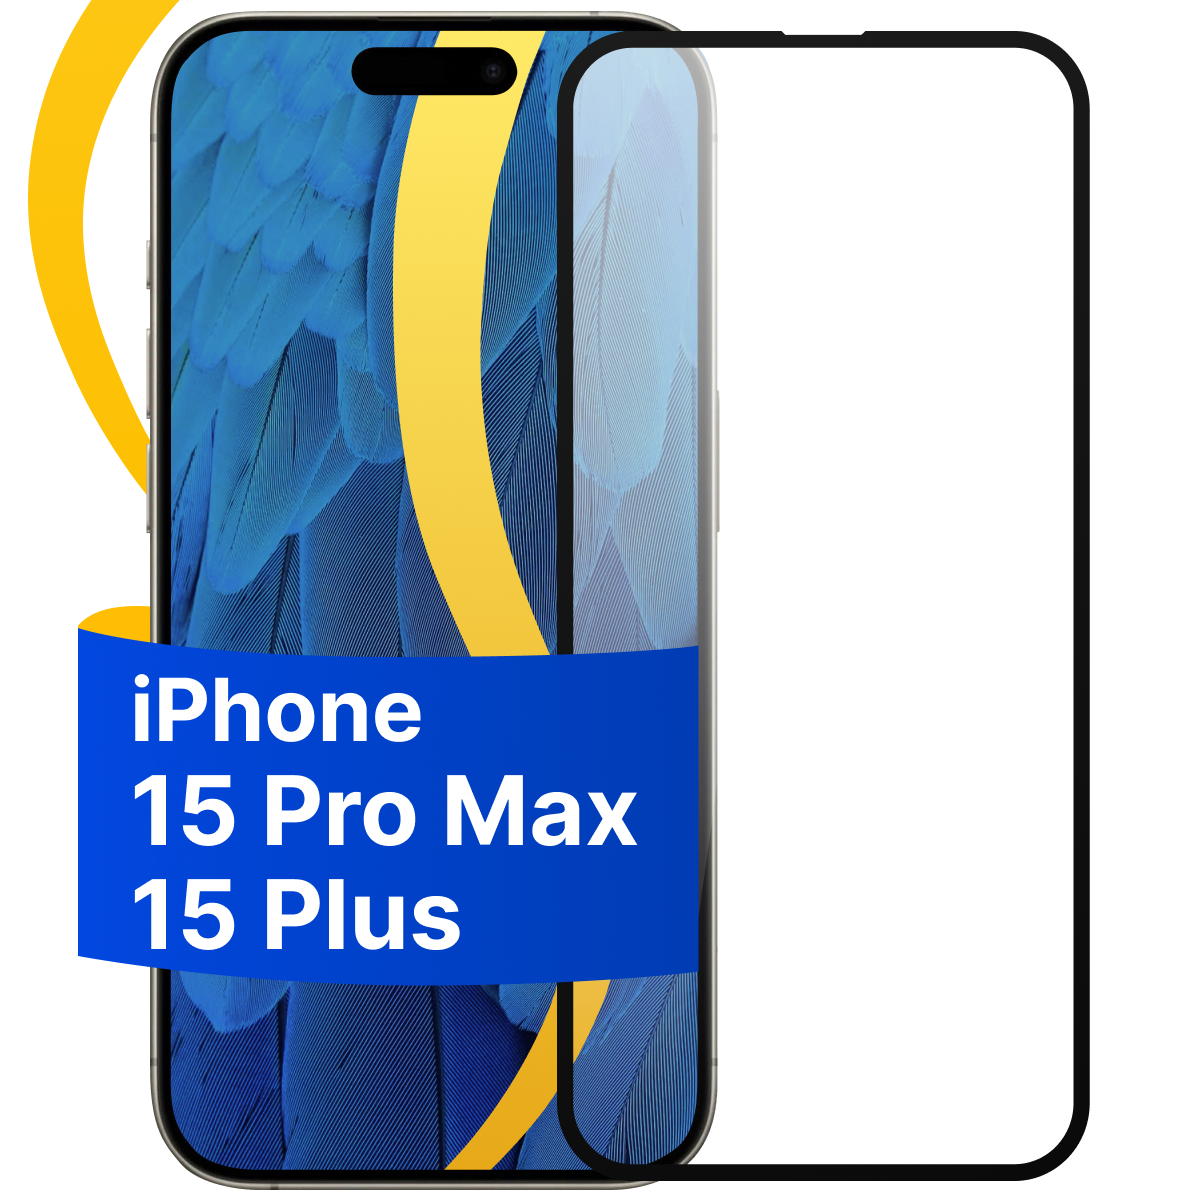 Глянцевое защитное стекло для телефона Apple iPhone 15 Pro Max и iPhone 15 Plus / Противоударное стекло на смартфон Эпл Айфон 15 Про Макс и 15 Плюс